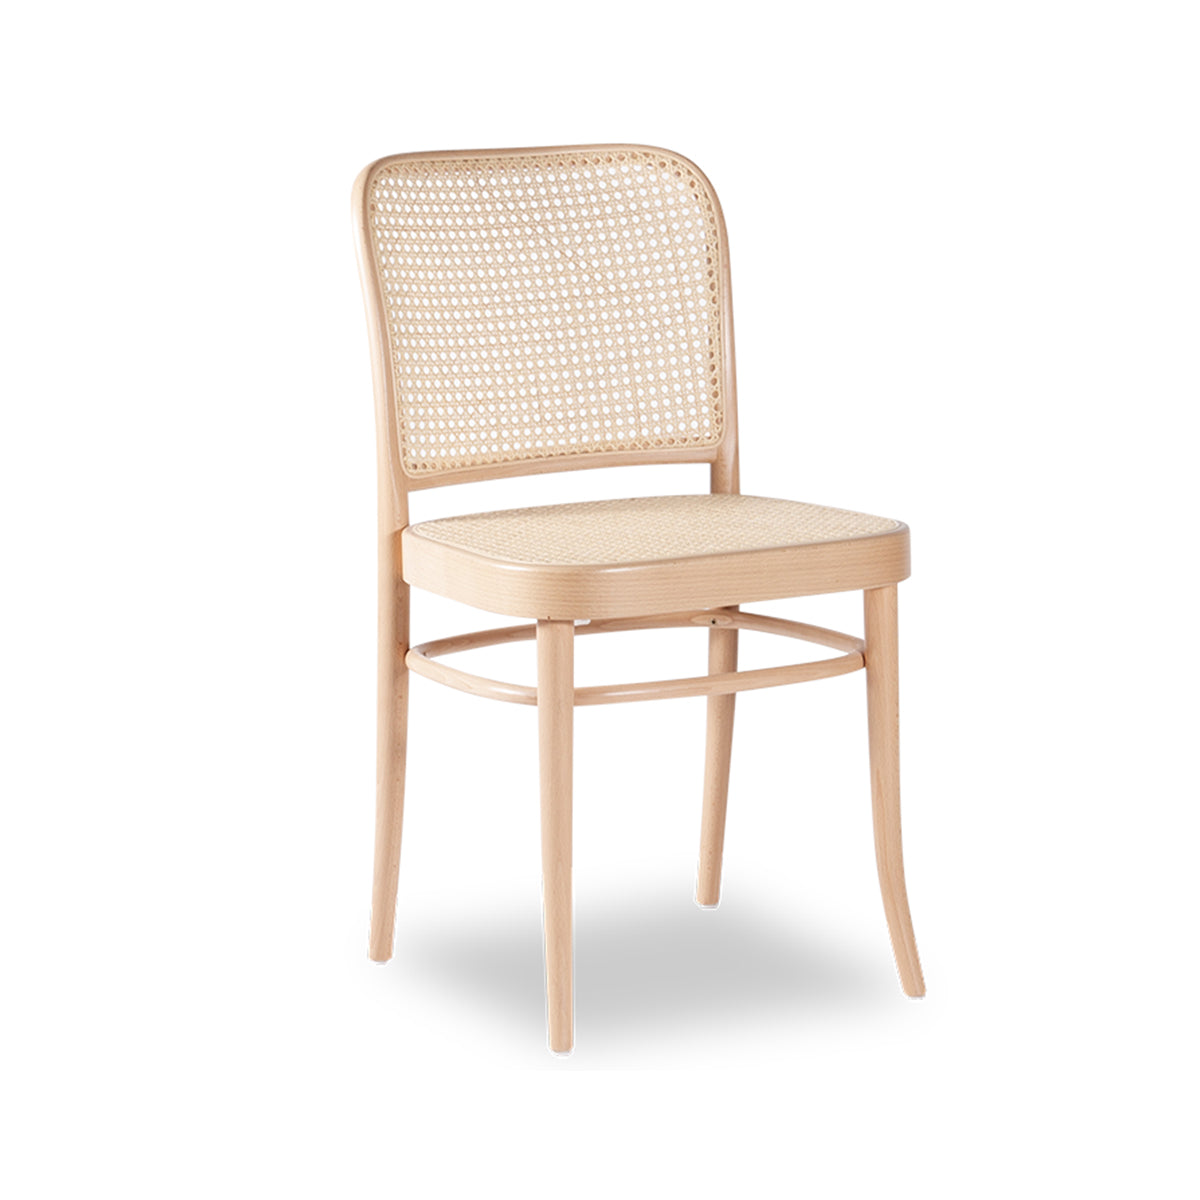 811 Hoffmann Chair - Cane Seat/Cane Backrest (Natural).